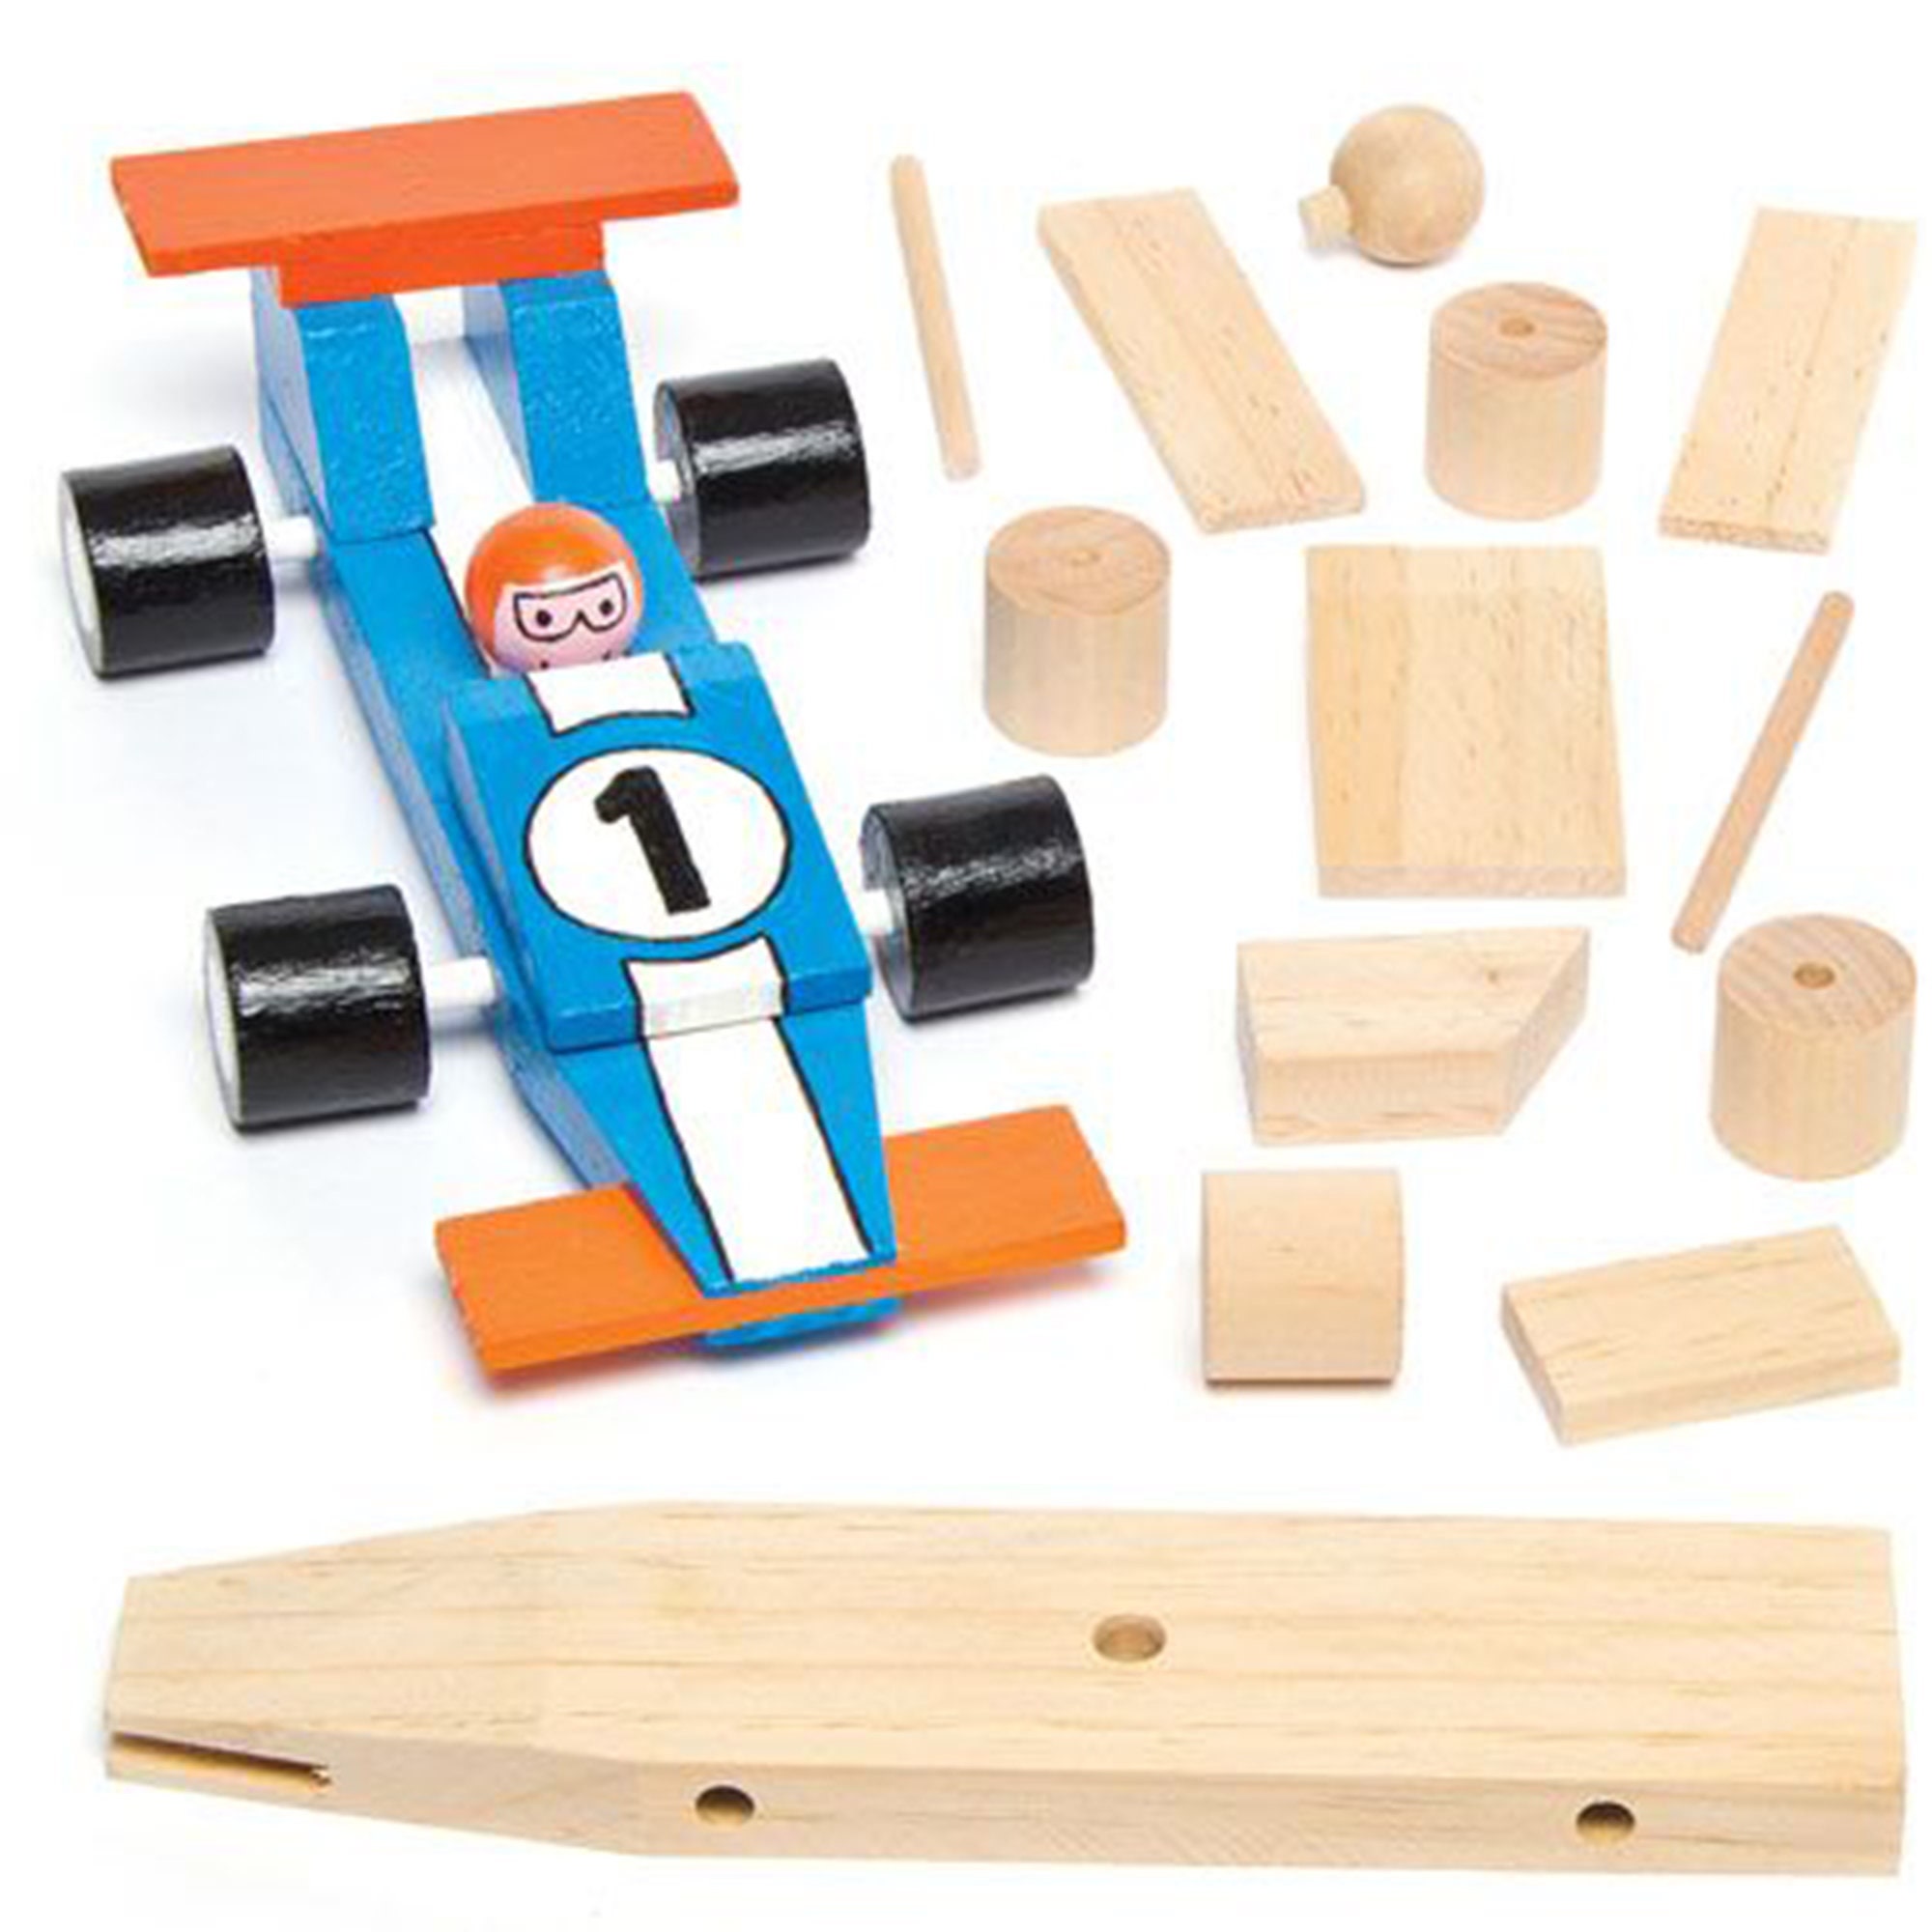 6 in 1 STEM Building Kits for Kids, Wooden Car Model Kit for Boys